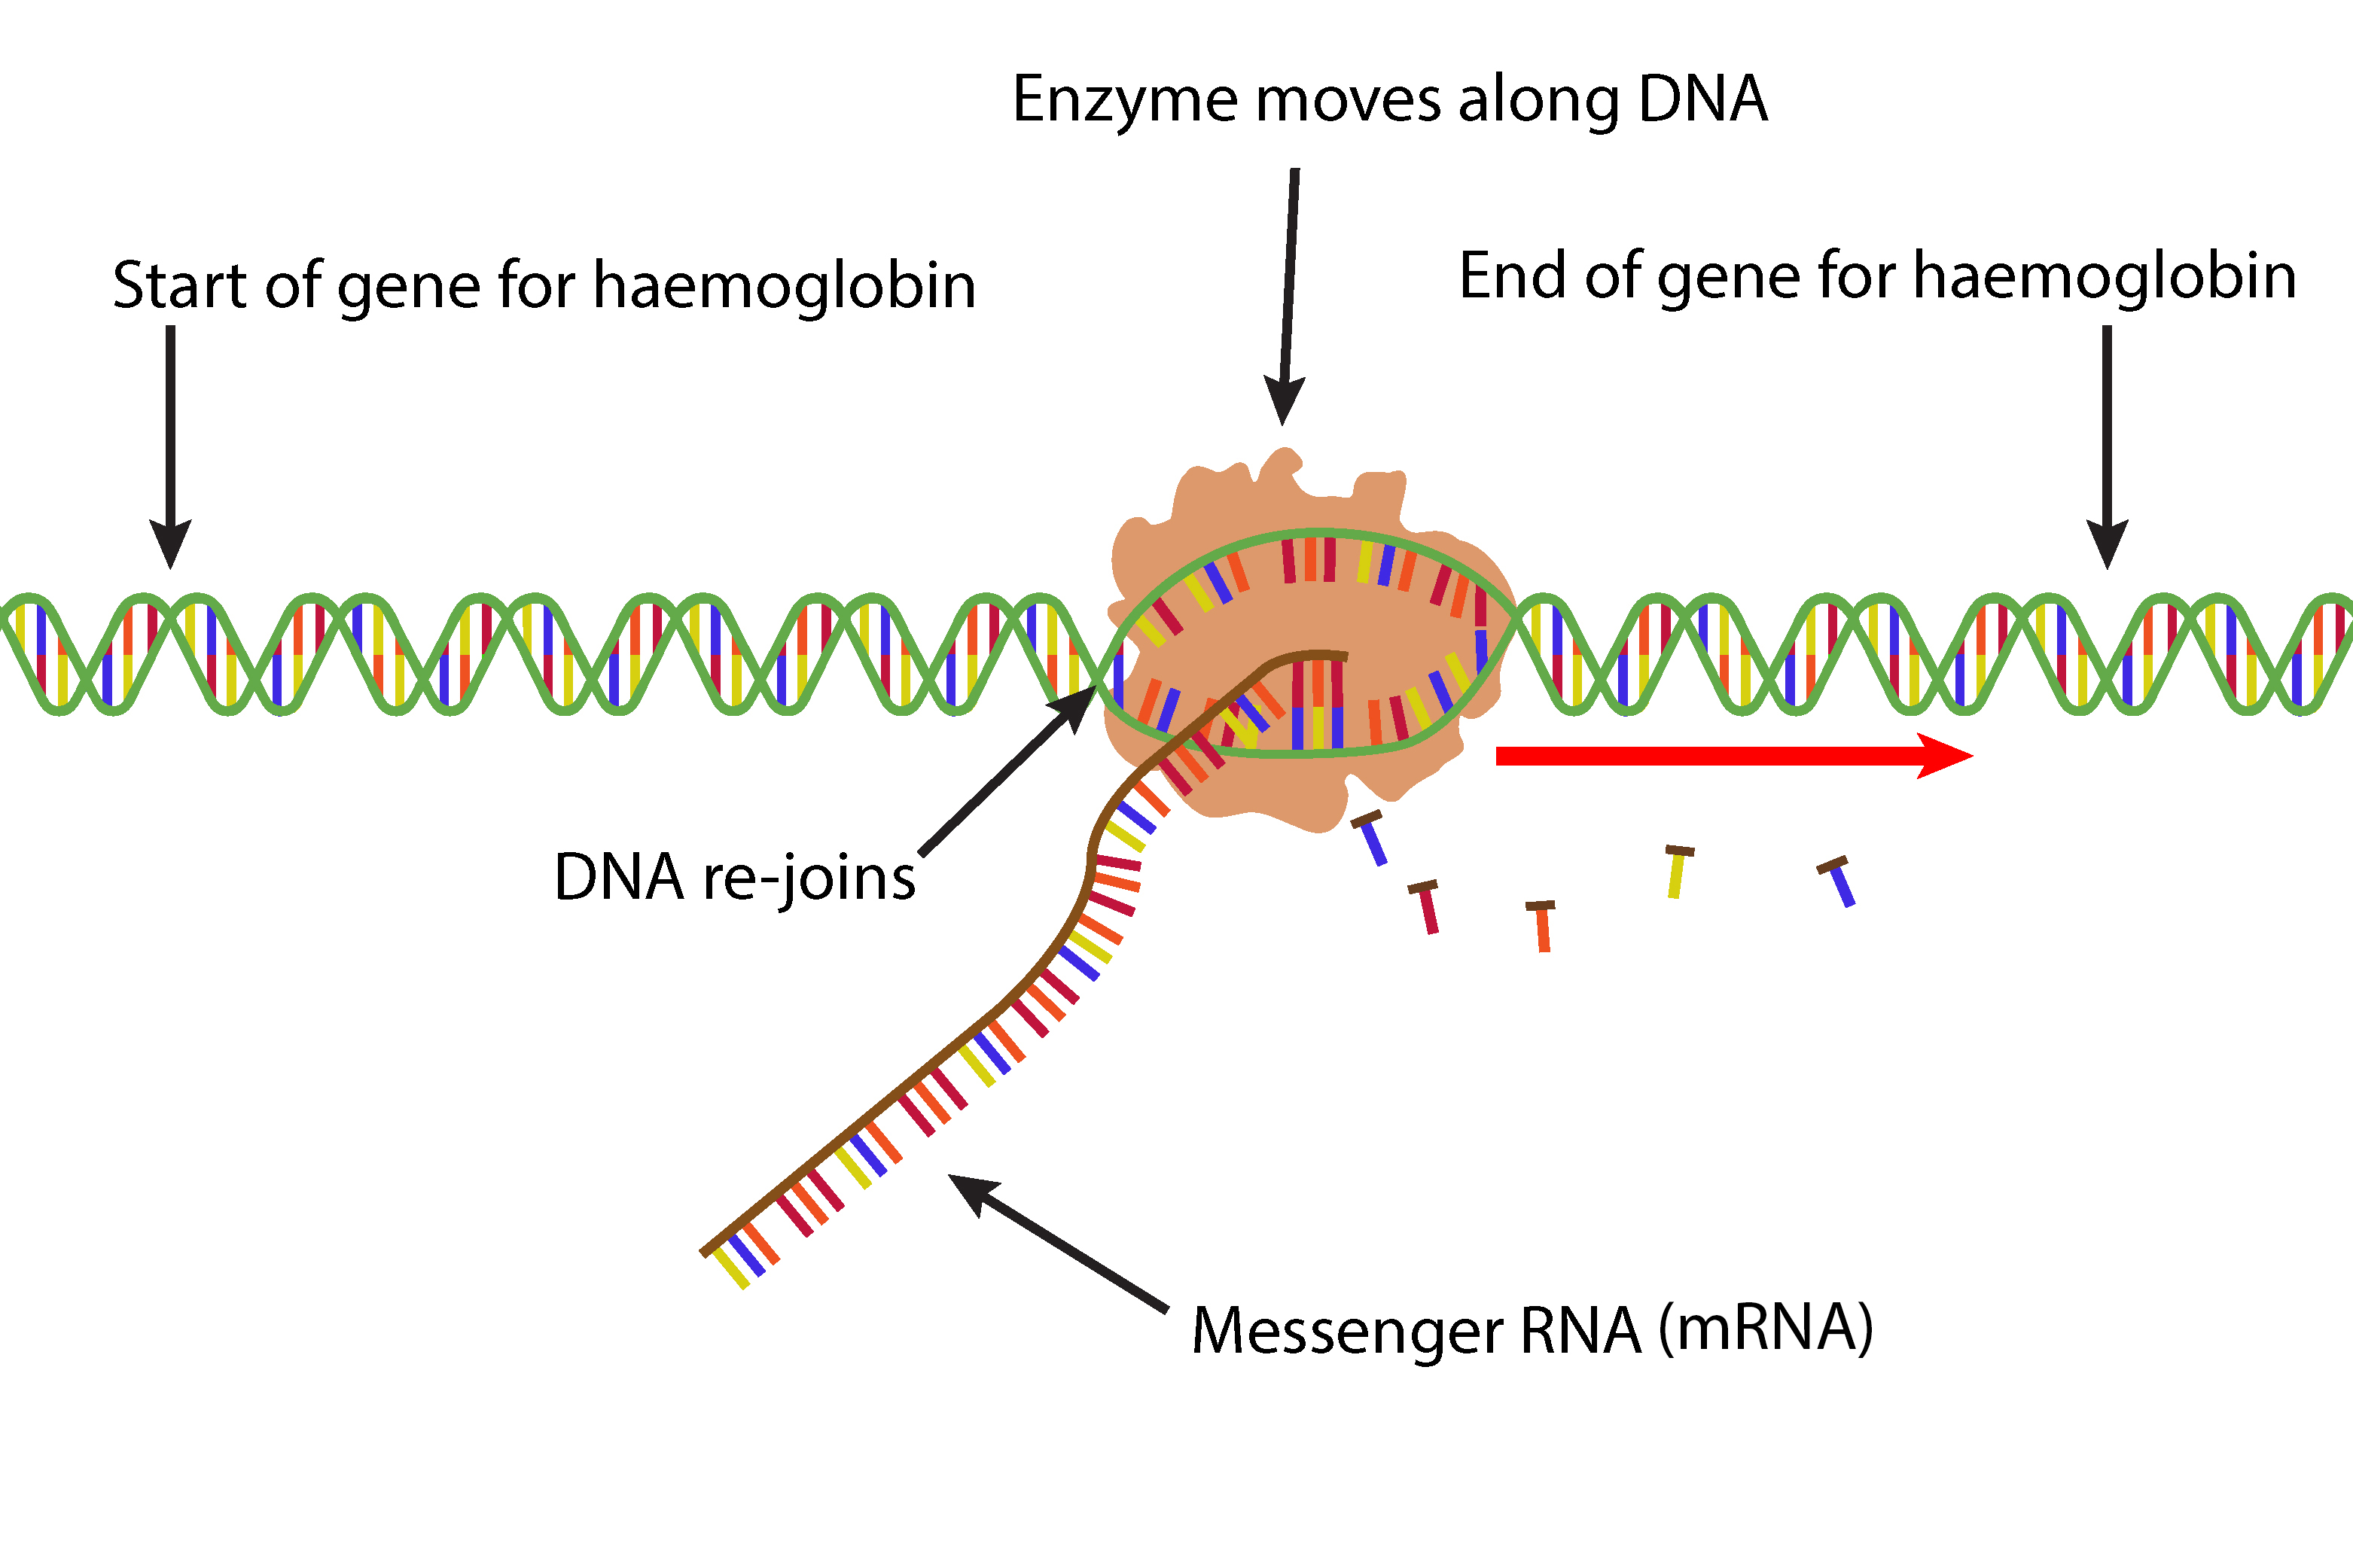 Joining nucleotides produces messenger RNA (mRNA)